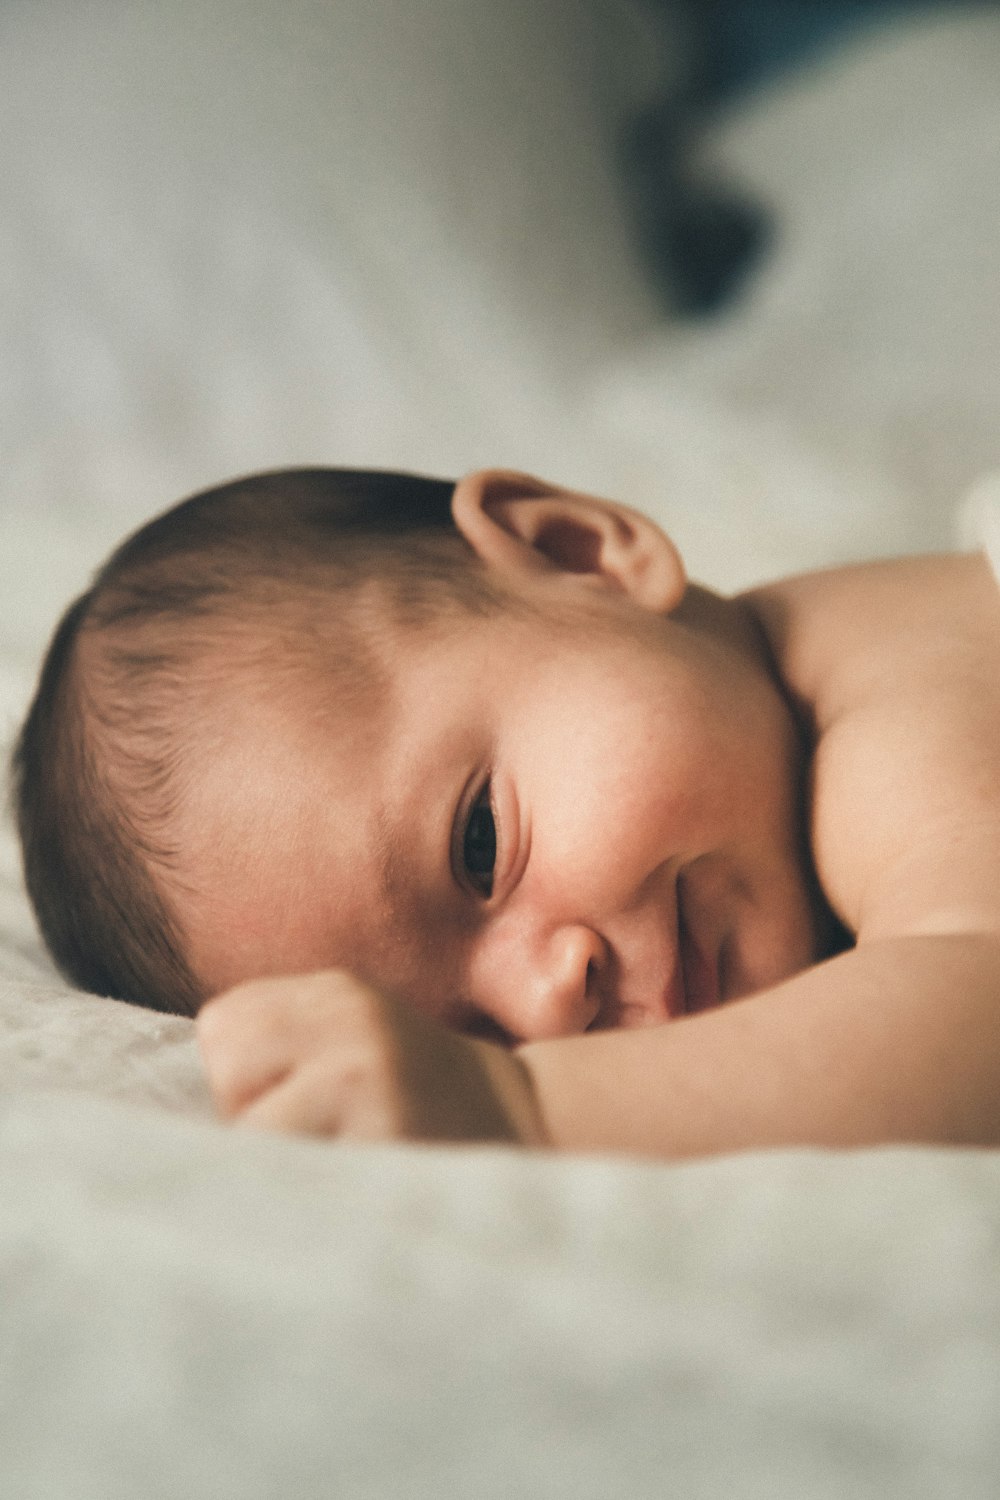 Pruning topless baby photo – Free Sleepy Image on Unsplash